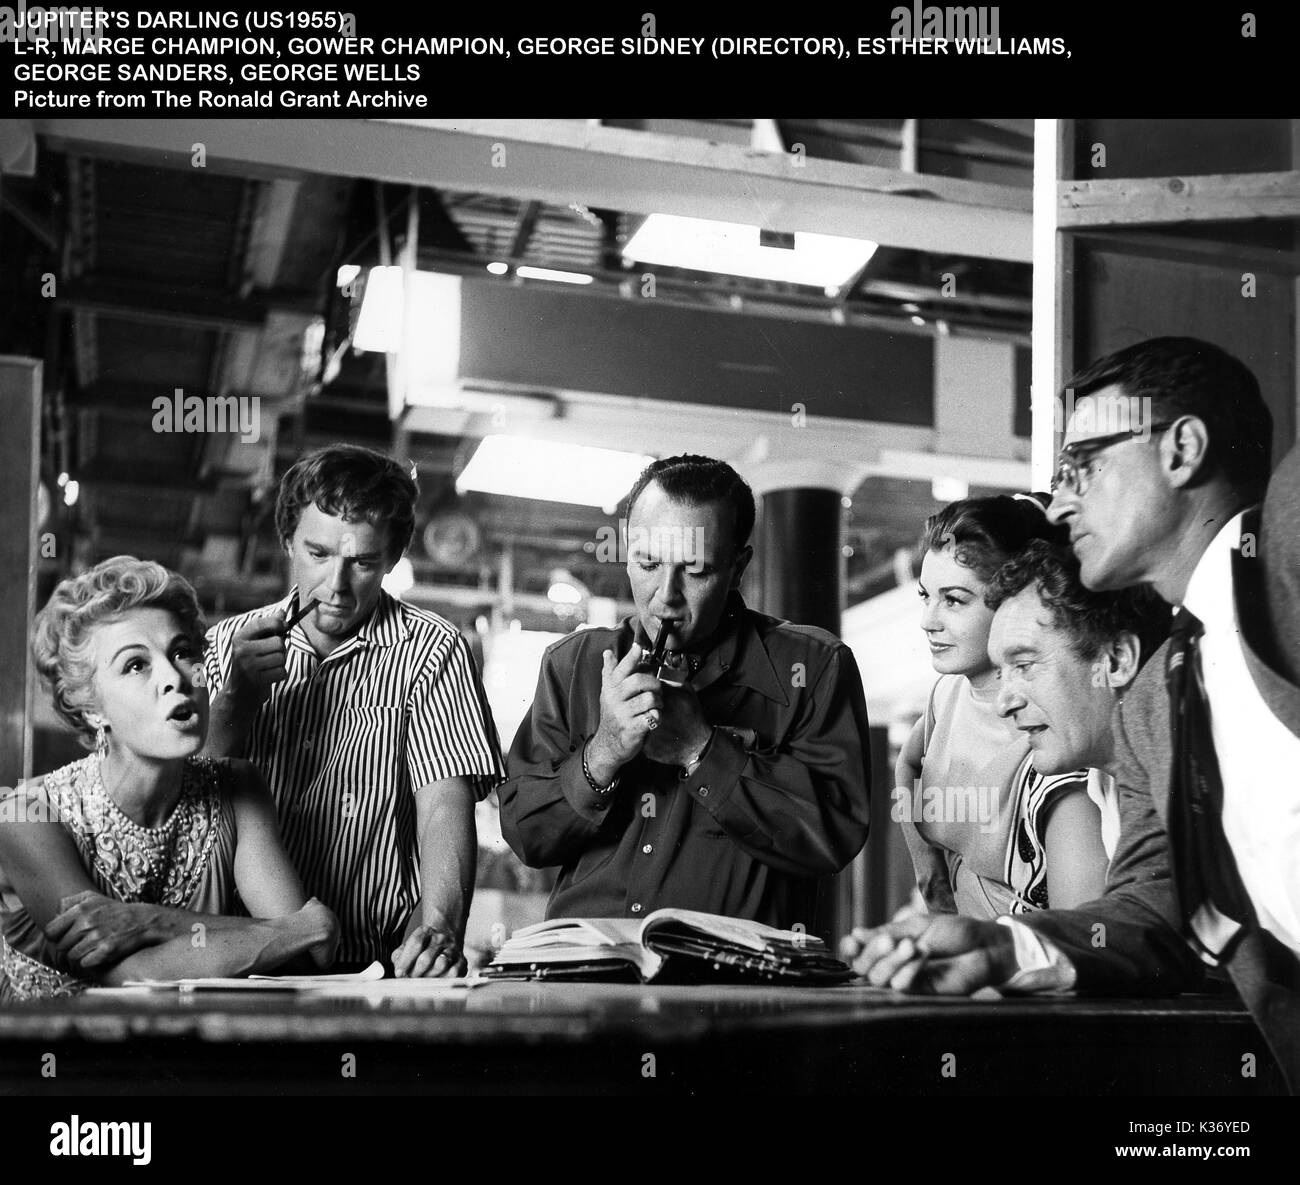 JUPITER'S DARLING [US 1955]  L-R, MARGE CHAMPION, GOWER CHANPION, director GEORGE SIDNEY, ESTHER WILLIAMS, GEORGE SANDERS, GEORGE WELLS Stock Photo